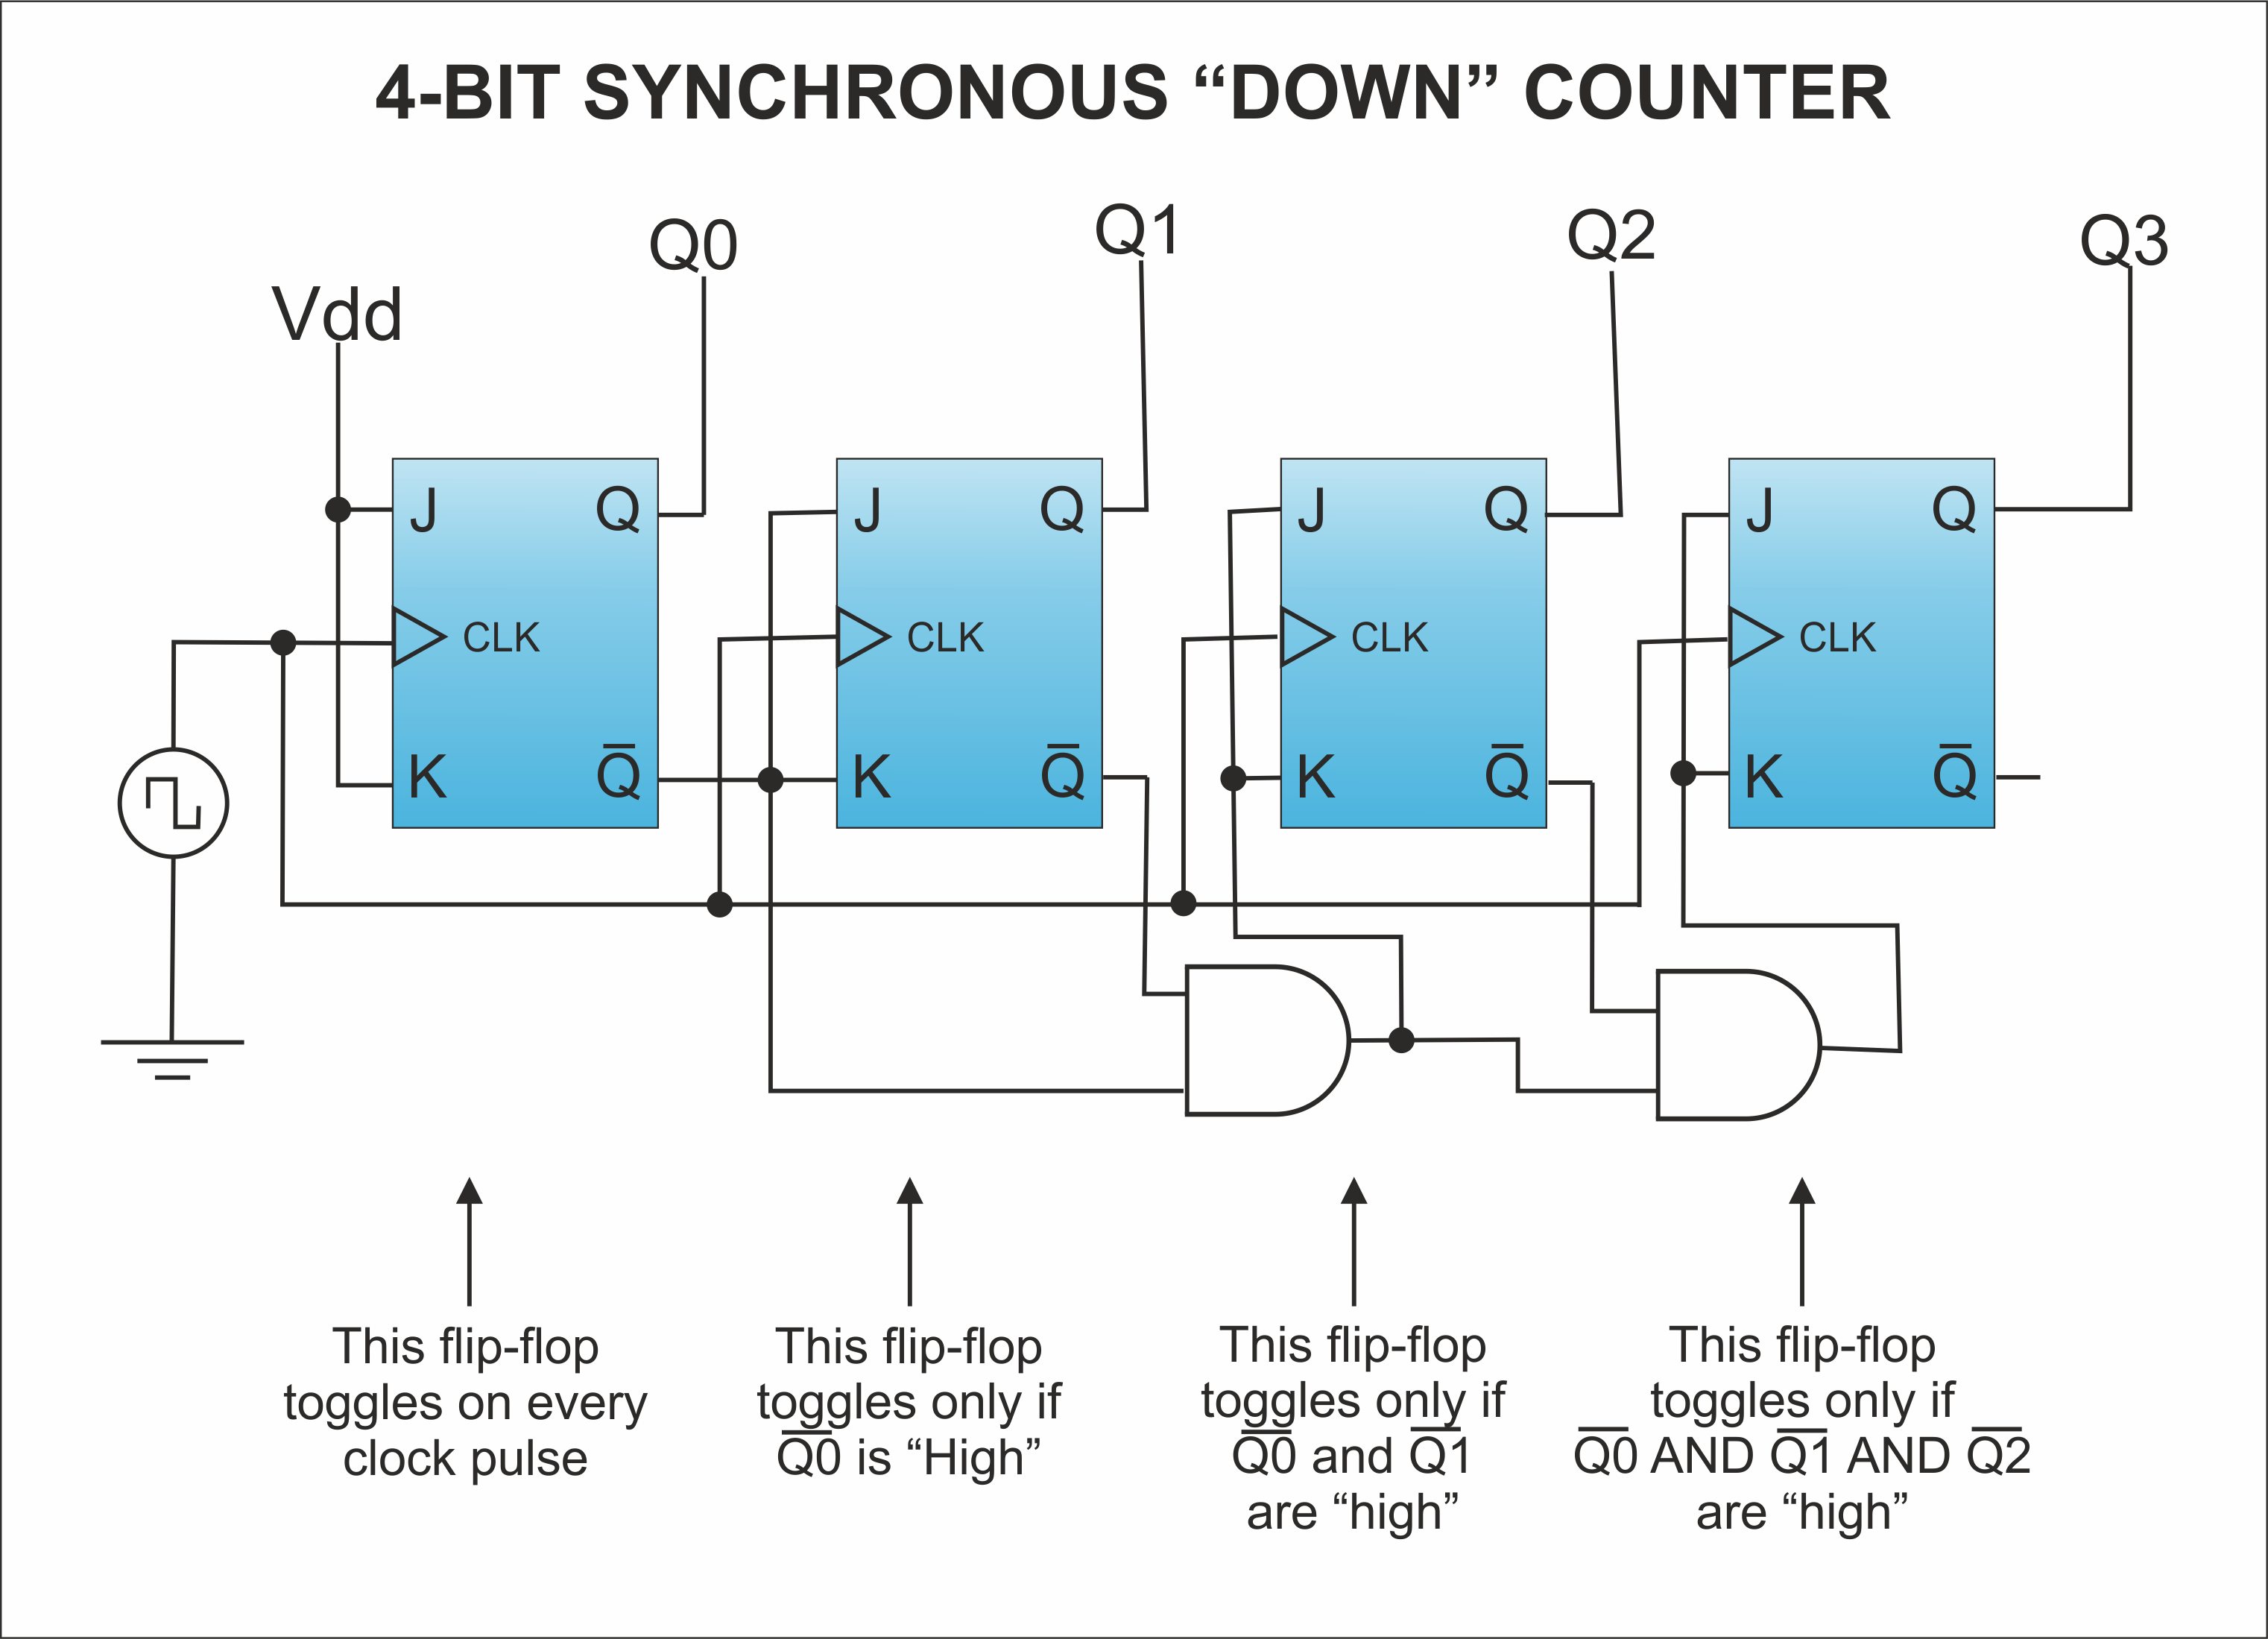 Counter Circuit Diagram Using Flip Flop